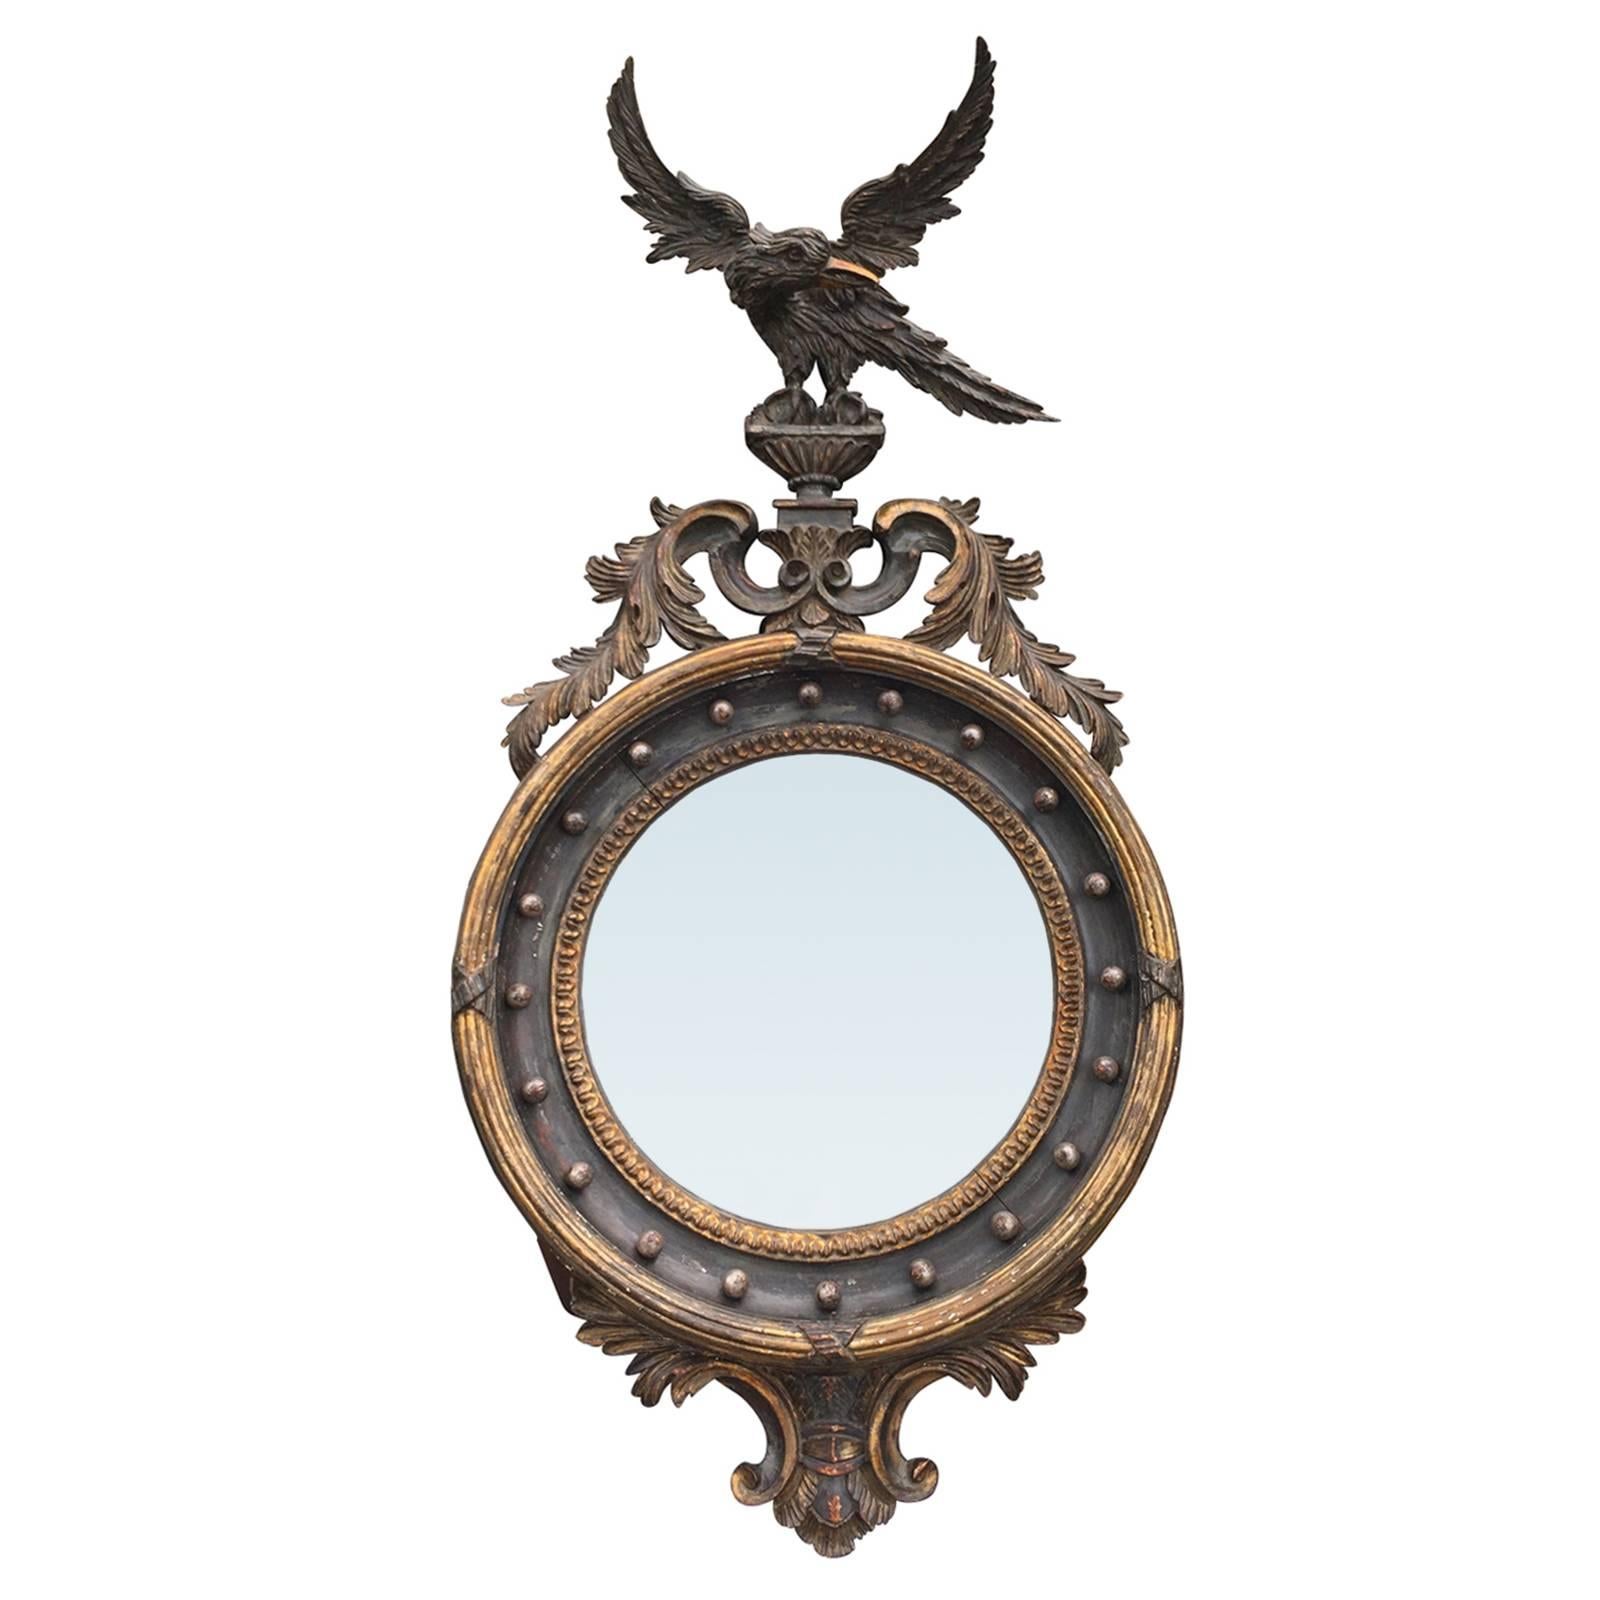 Period 19th Century English Regency Convex Mirror with Eagle